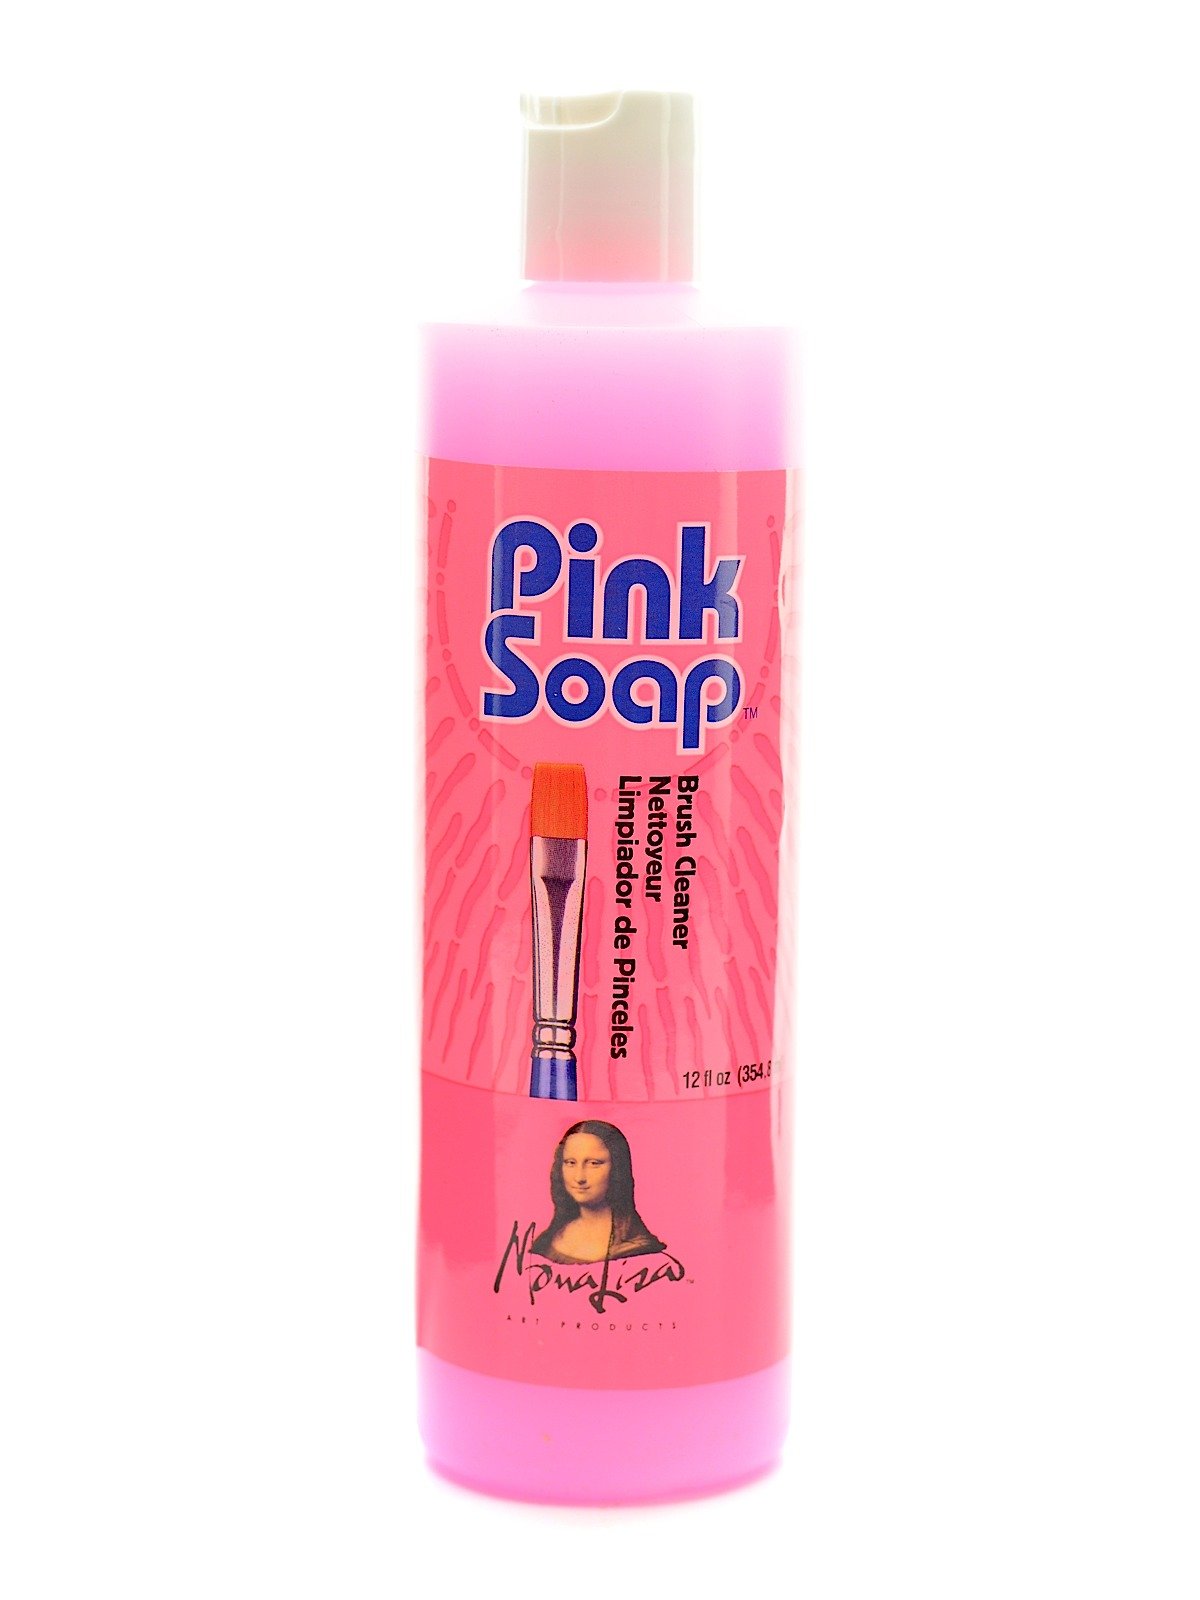 Mona Lisa - Pink Brush Soap